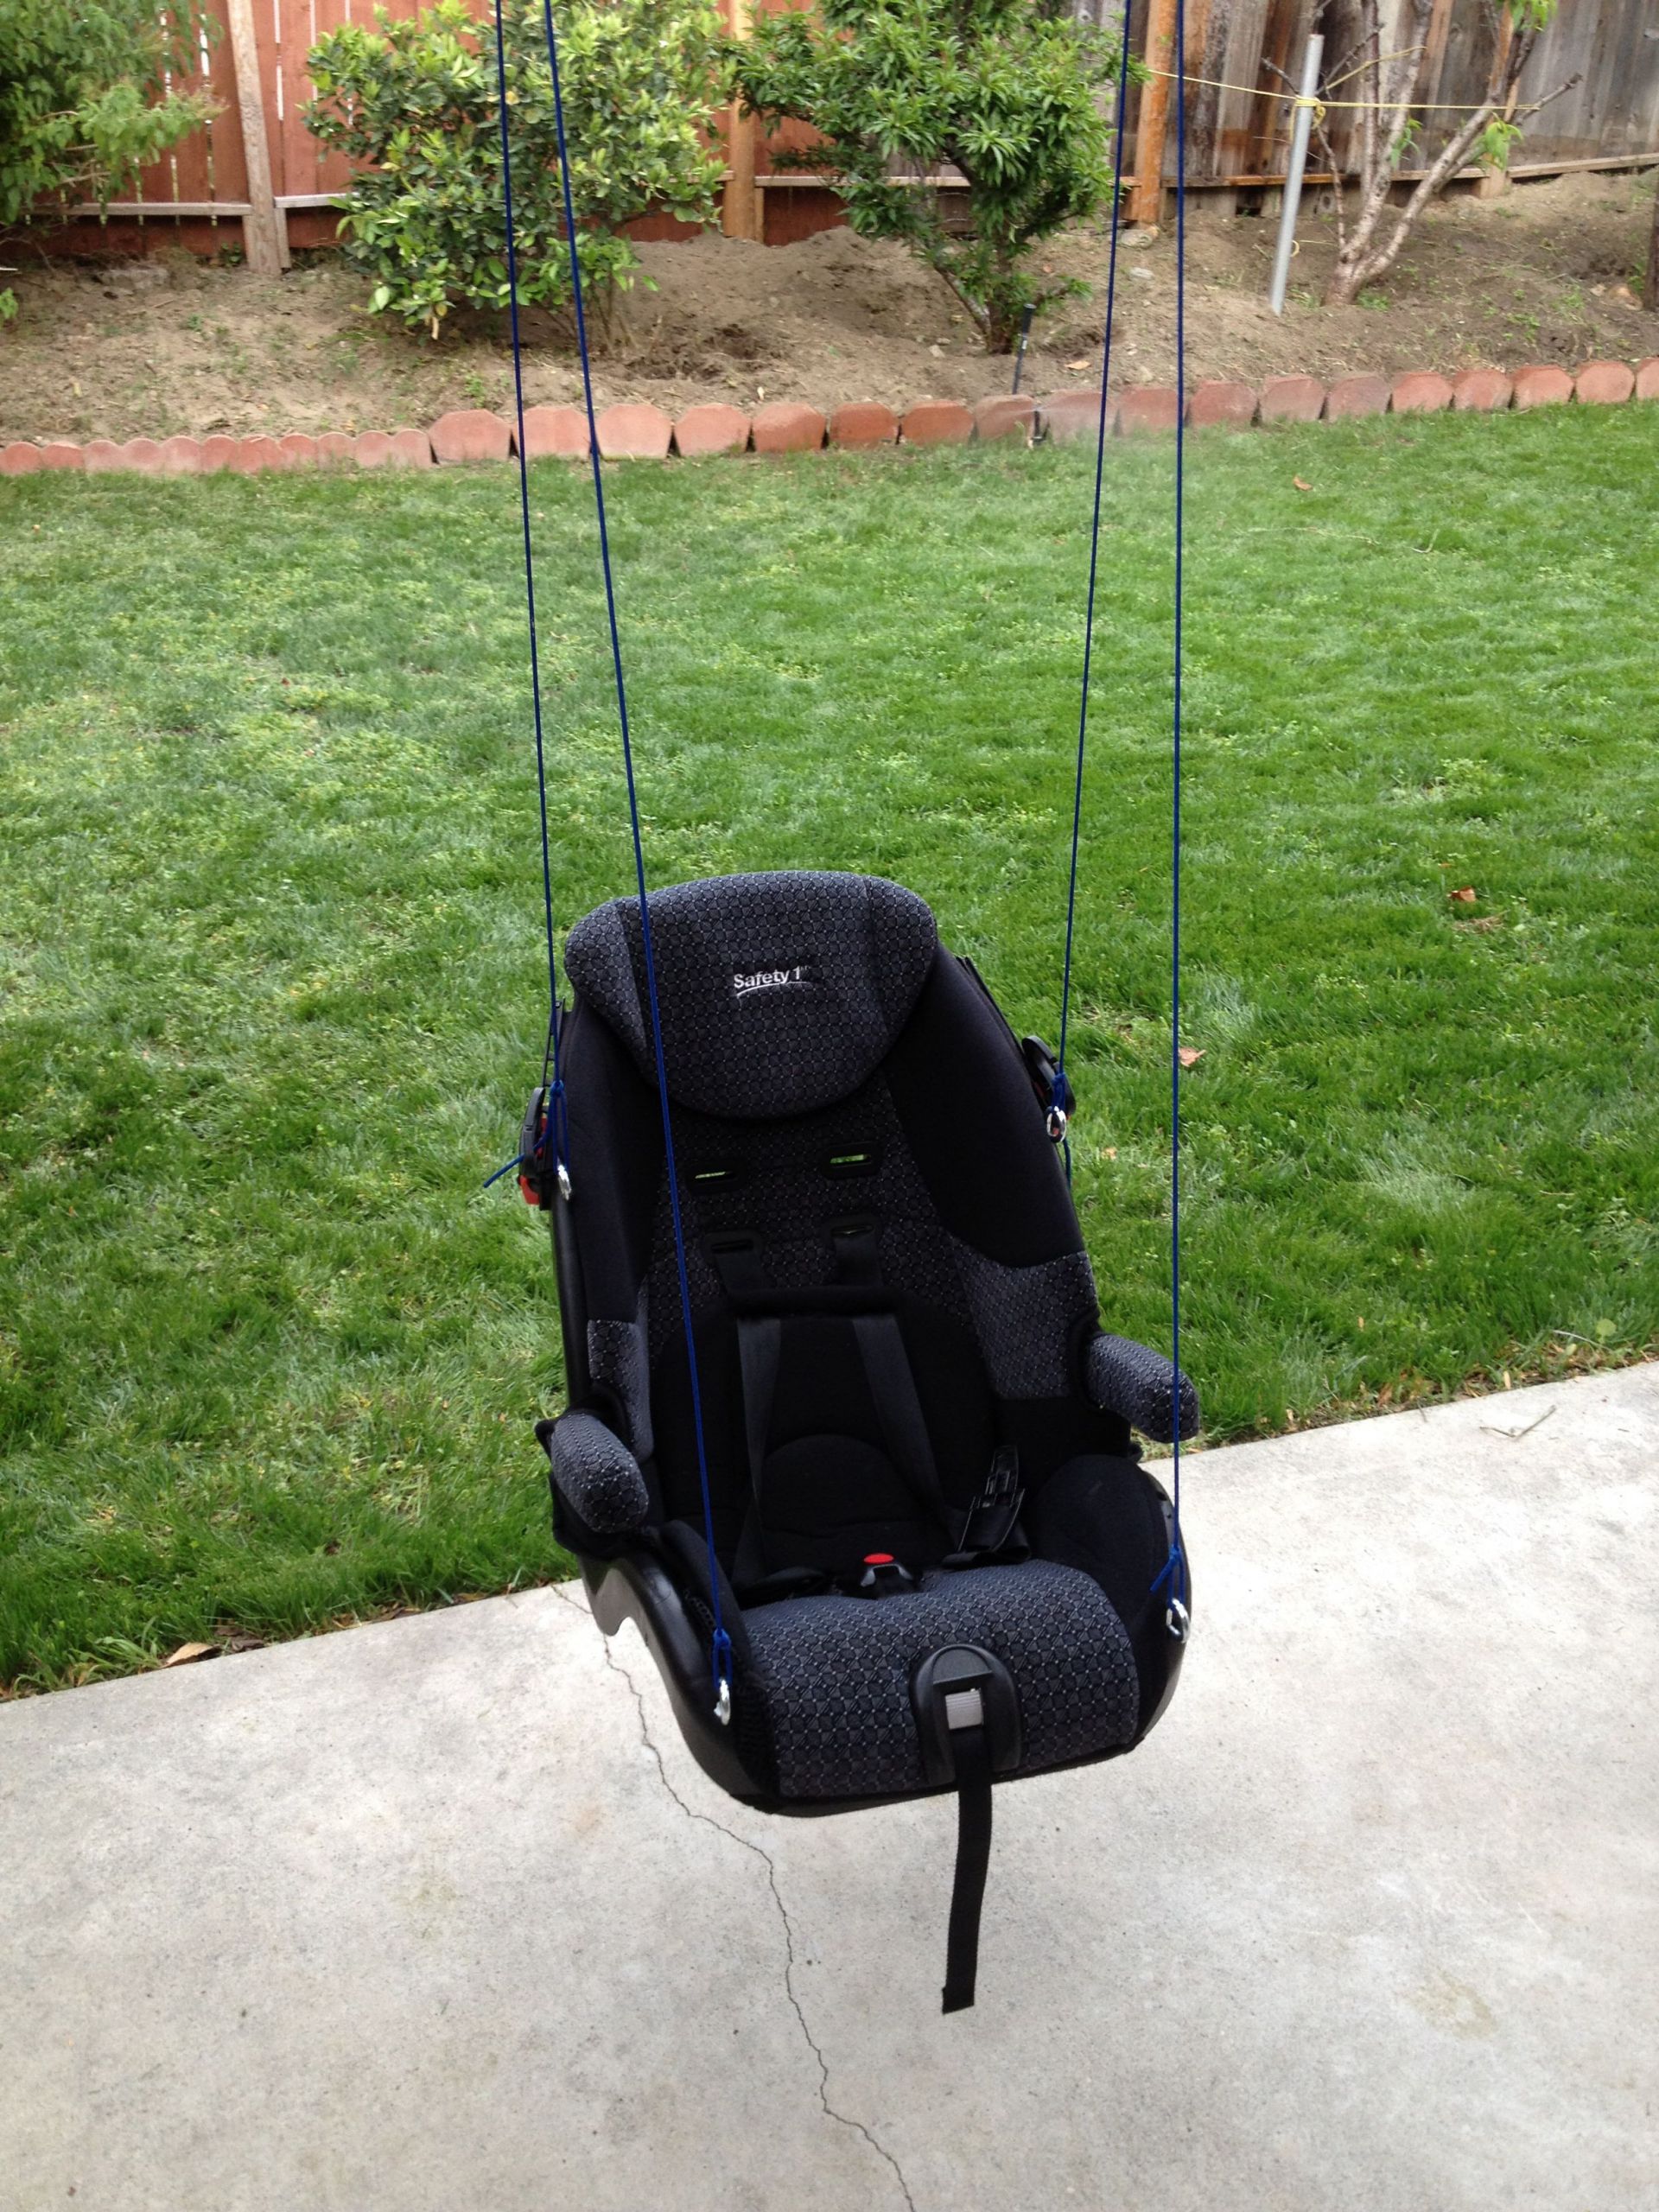 DIY Outdoor Baby Swing
 Diy car seat upcycle diy baby swing outdoor Awesome idea